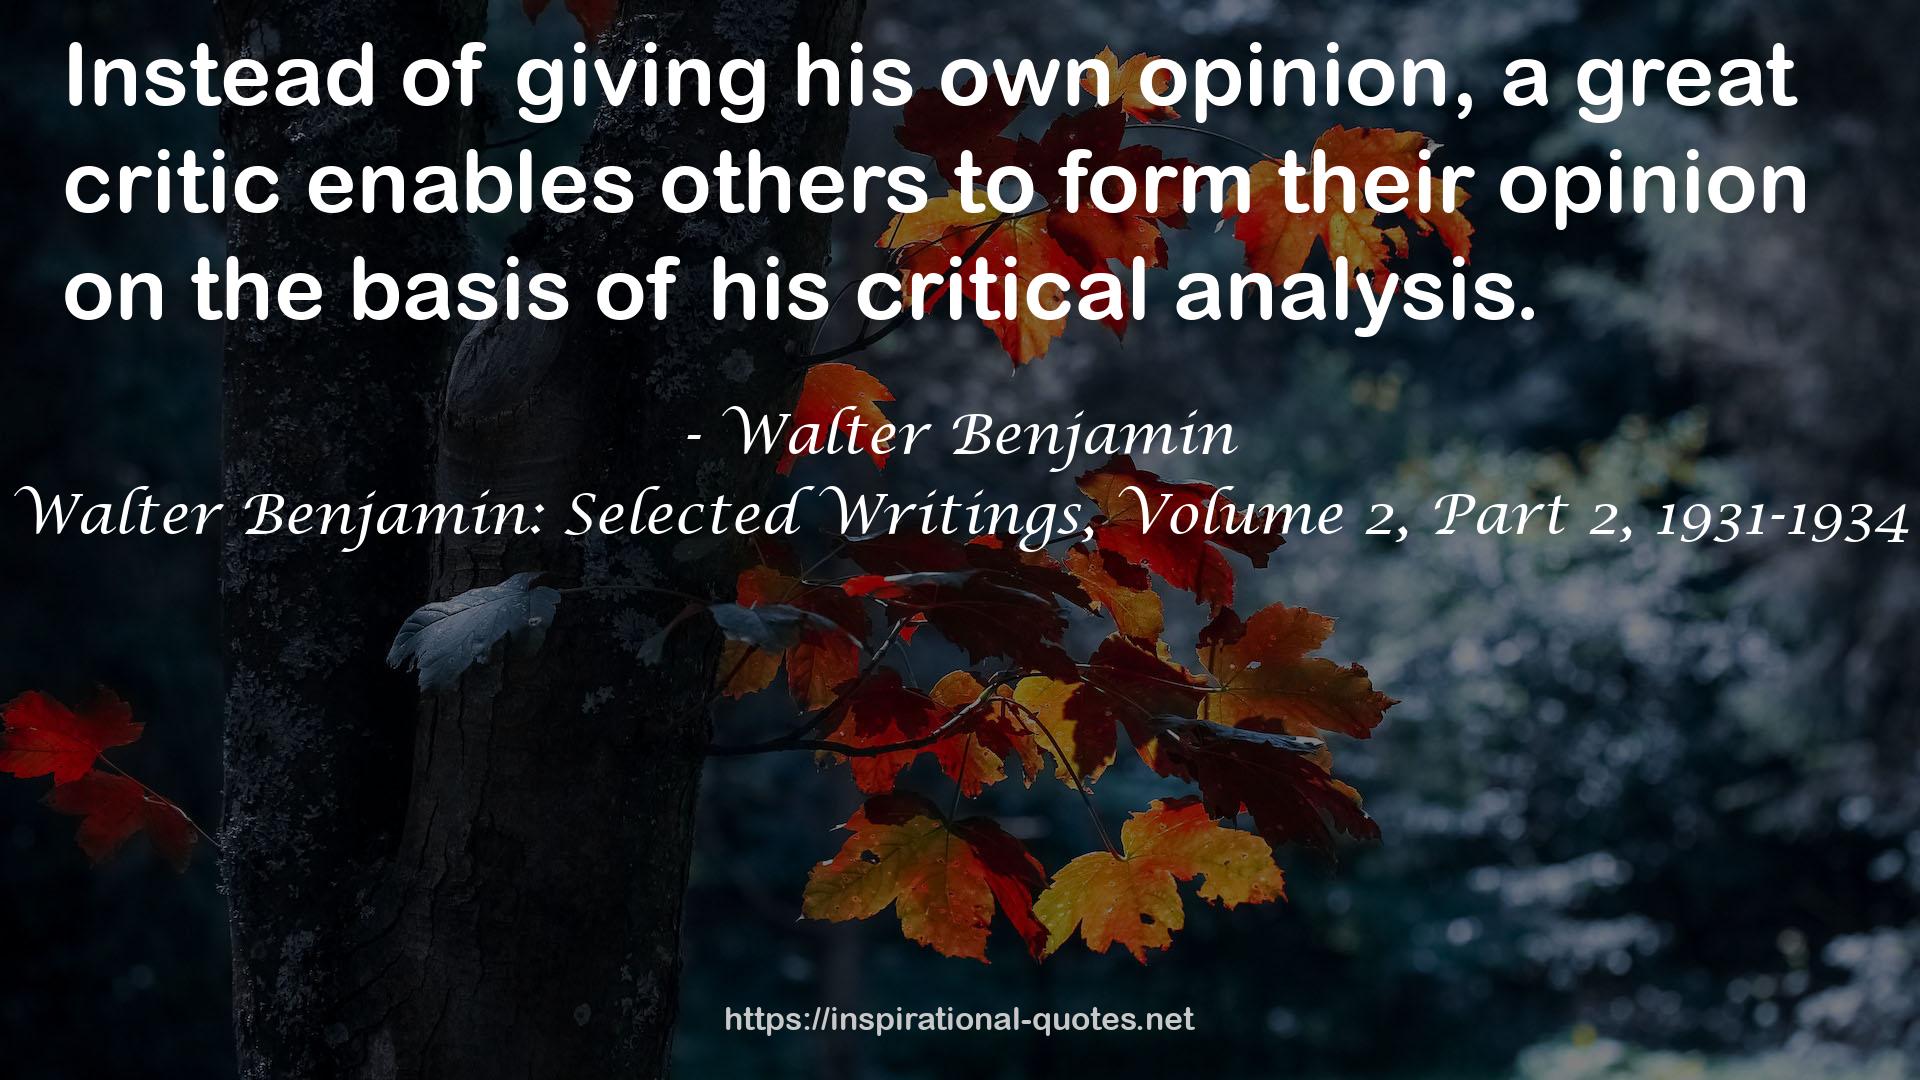 Walter Benjamin: Selected Writings, Volume 2, Part 2, 1931-1934 QUOTES